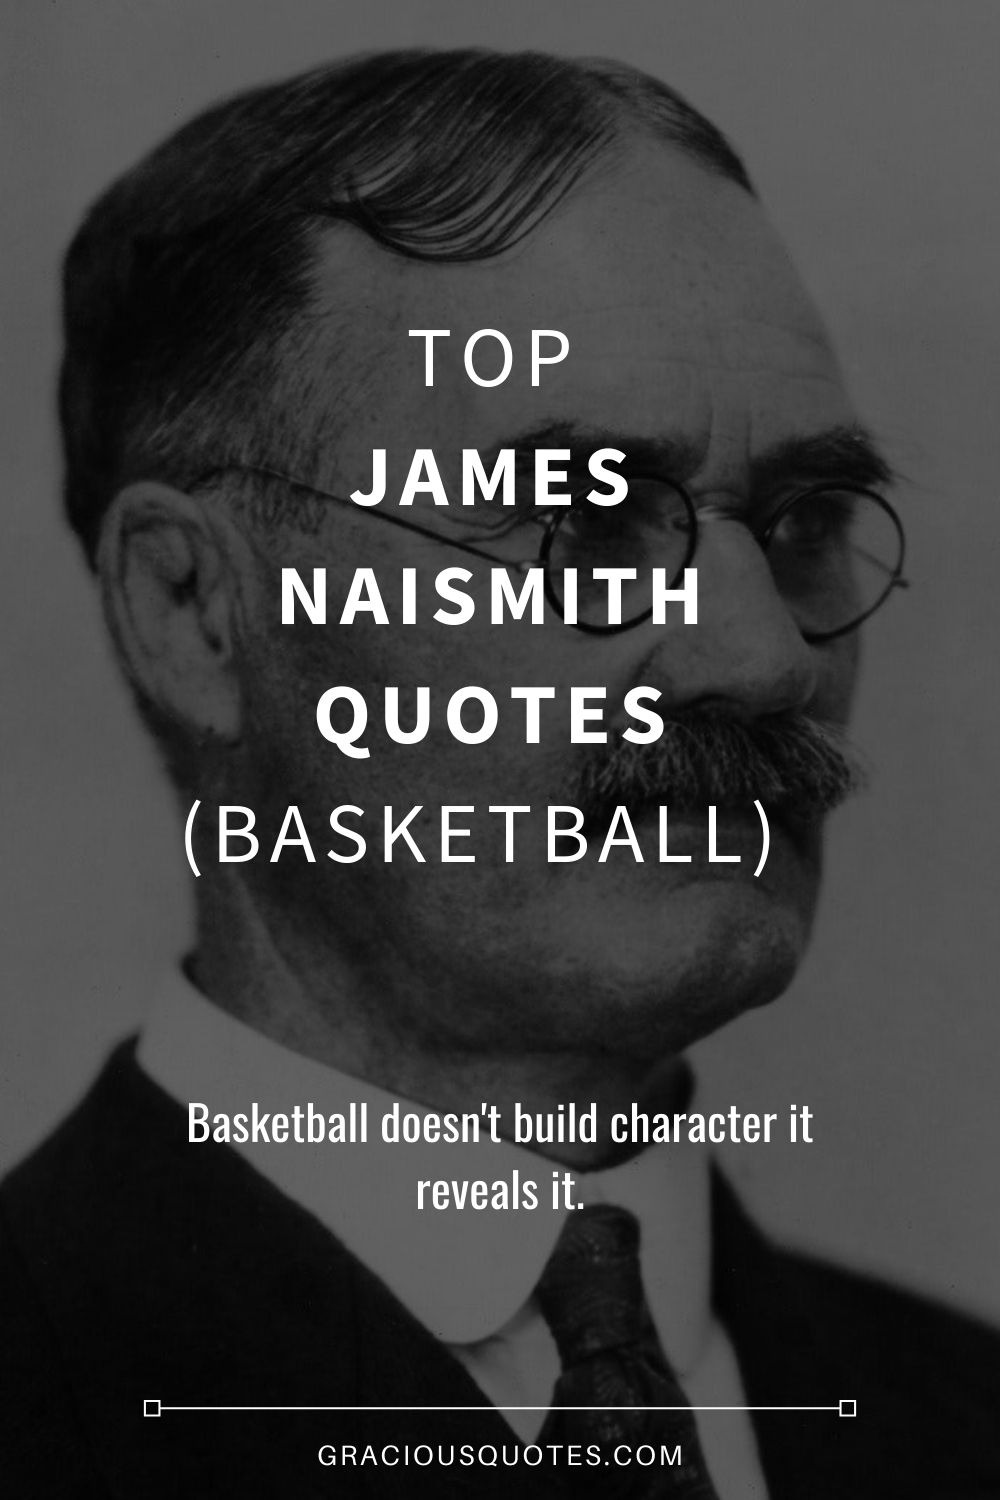 Top James Naismith Quotes (BASKETBALL) - Gracious Quotes